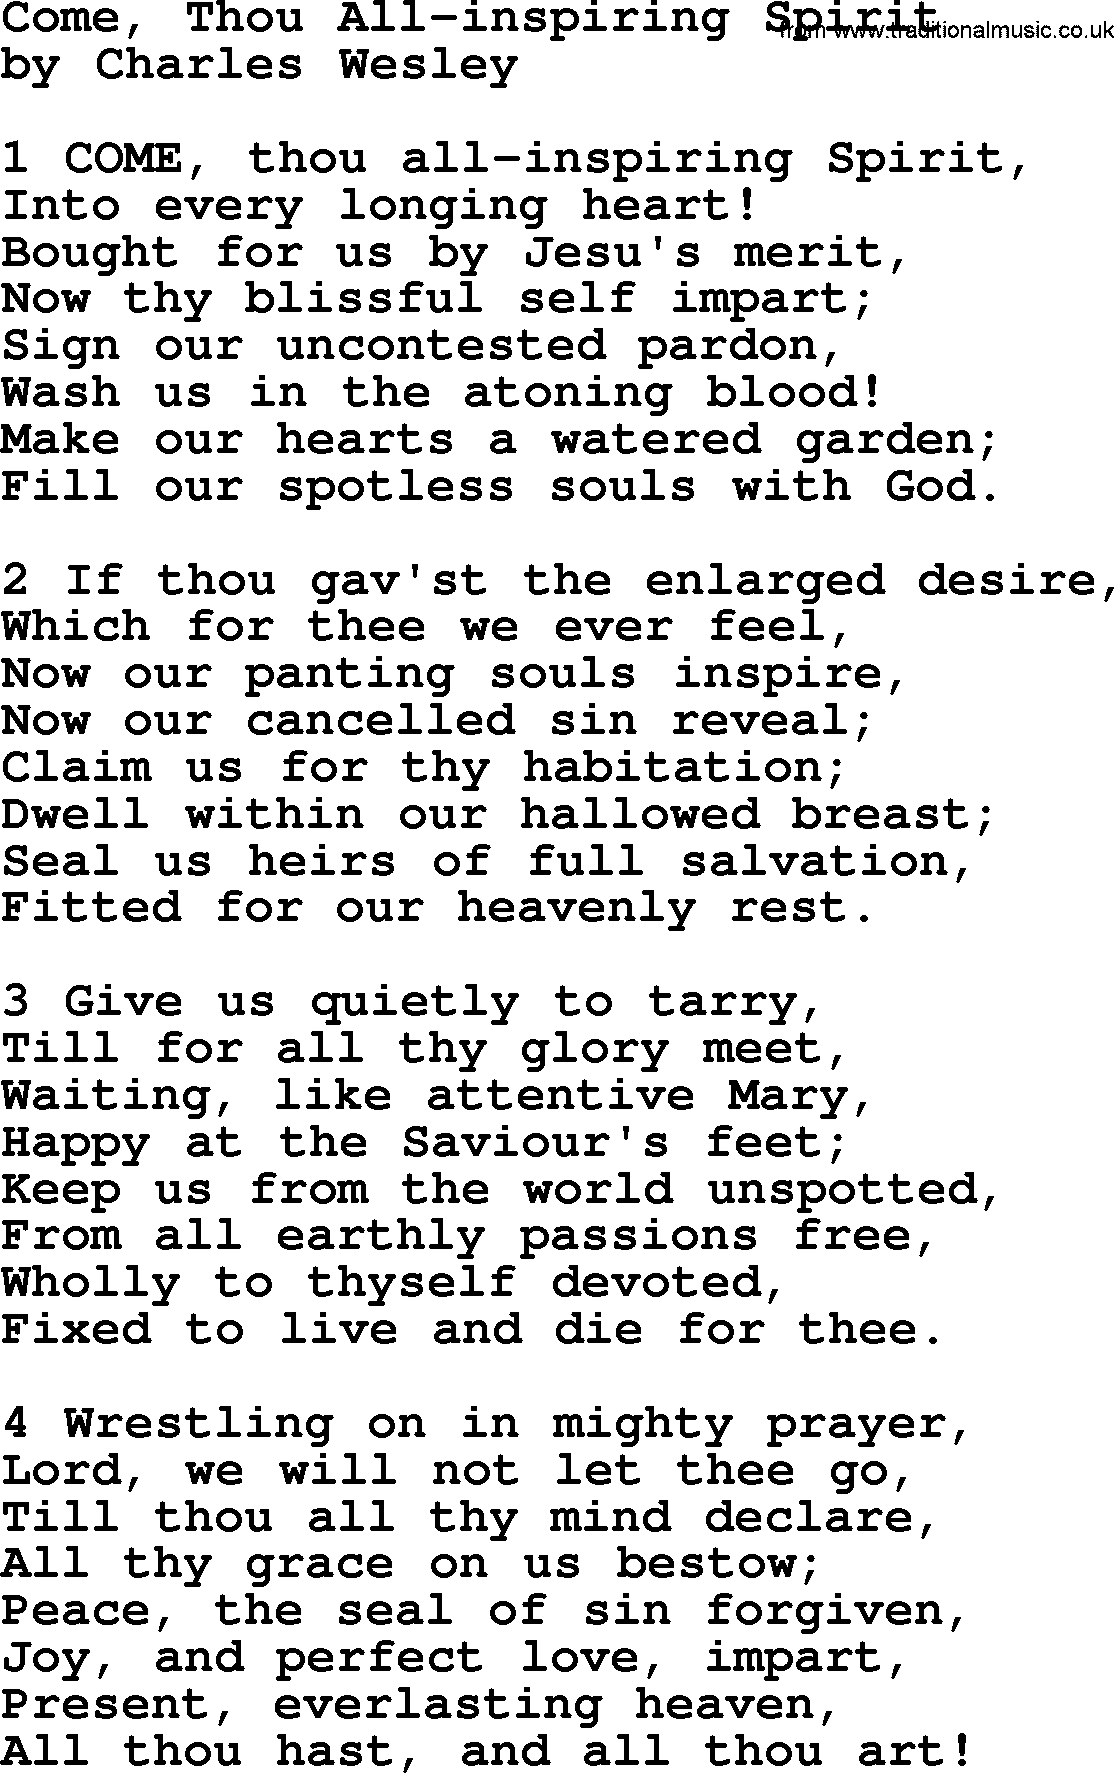 Charles Wesley hymn: Come, Thou All-inspiring Spirit, lyrics